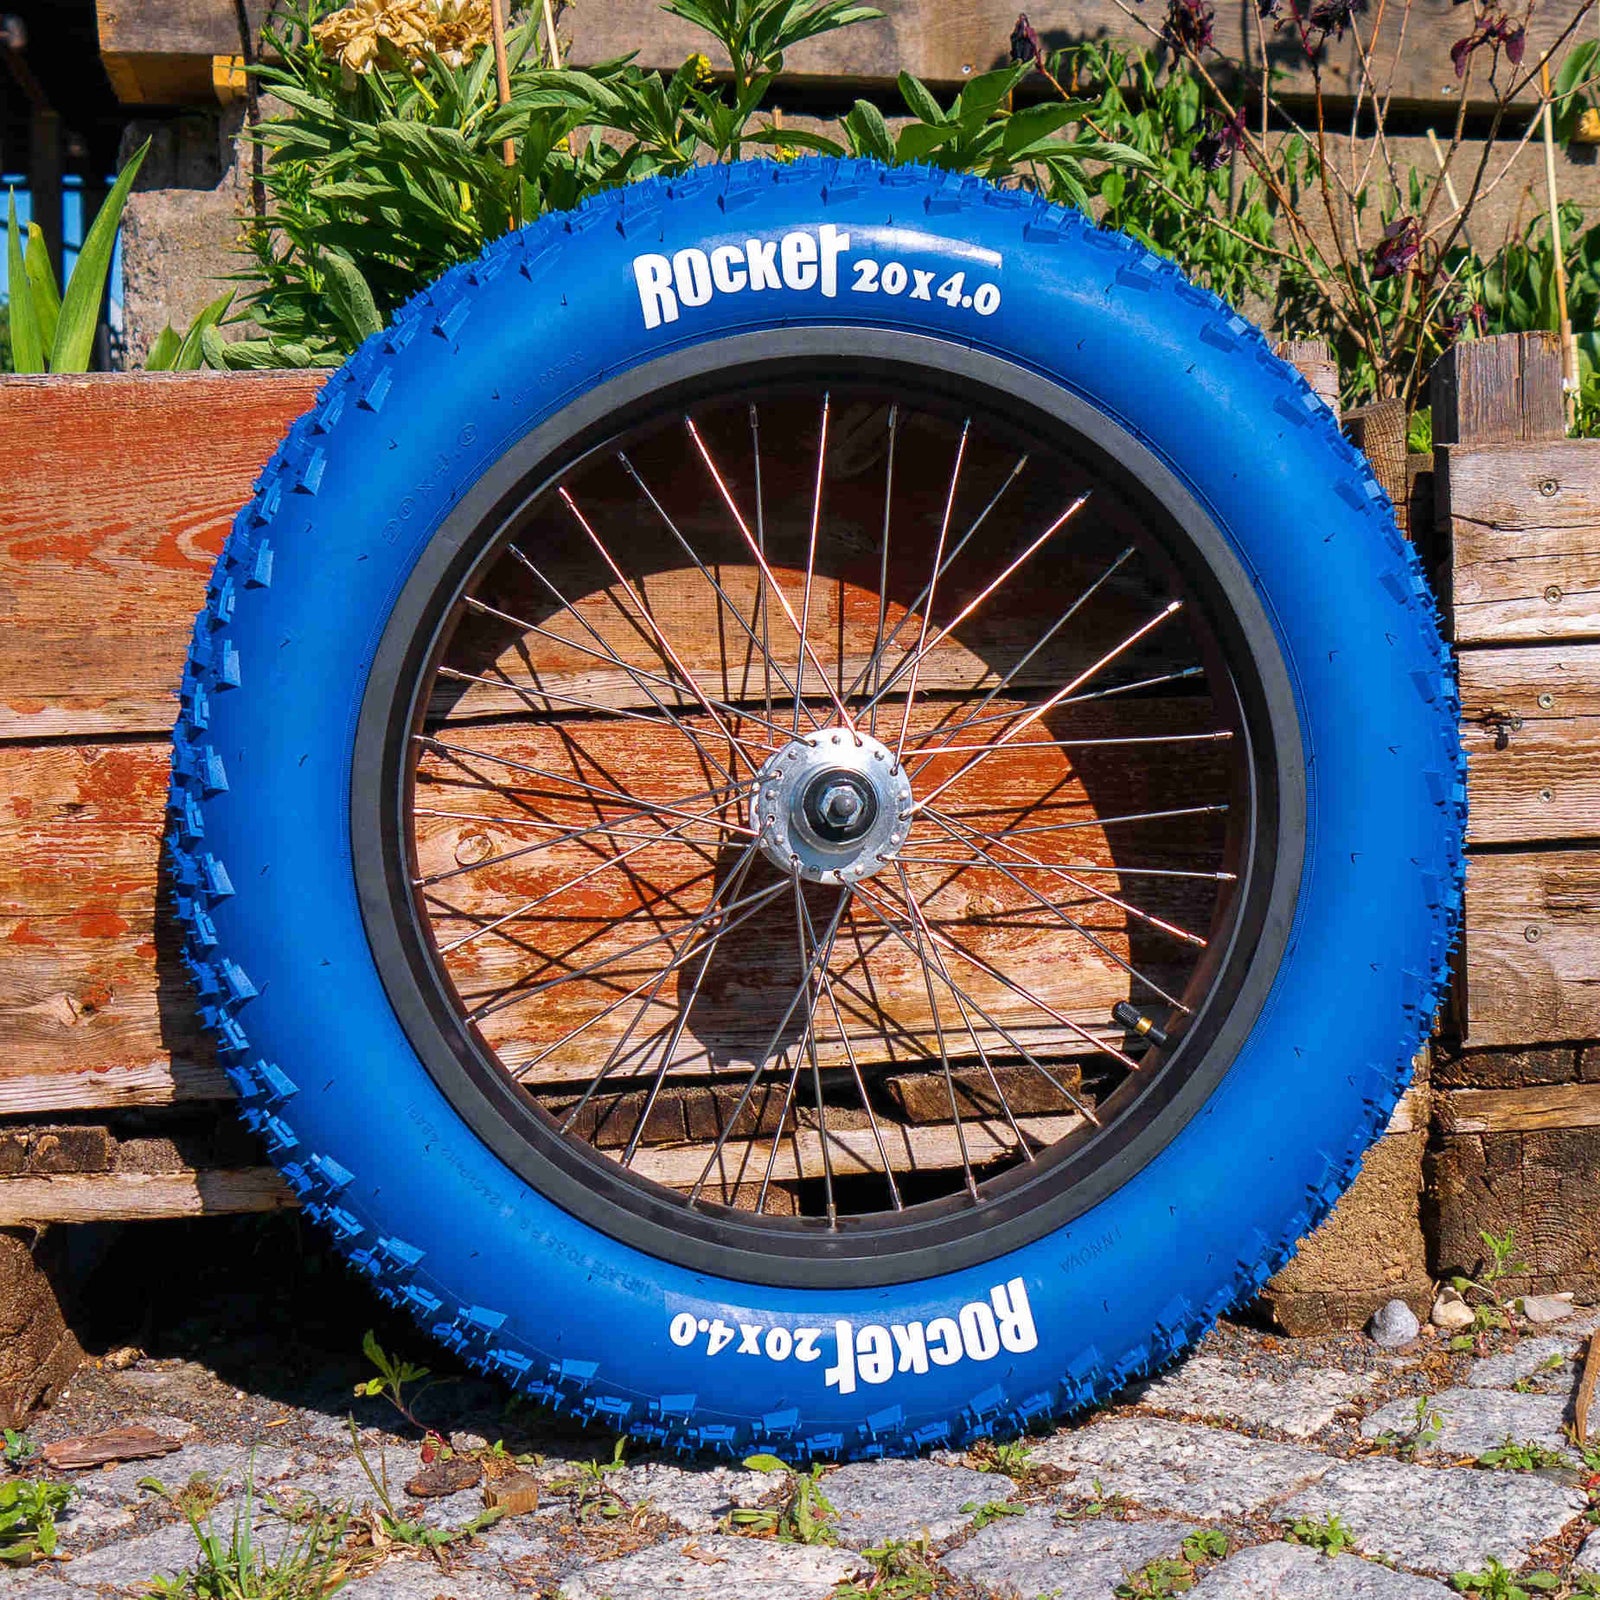 Innova Rocker 20 x 4.0 Inch Colored All-Terrain Tire - Urban Drivestyle